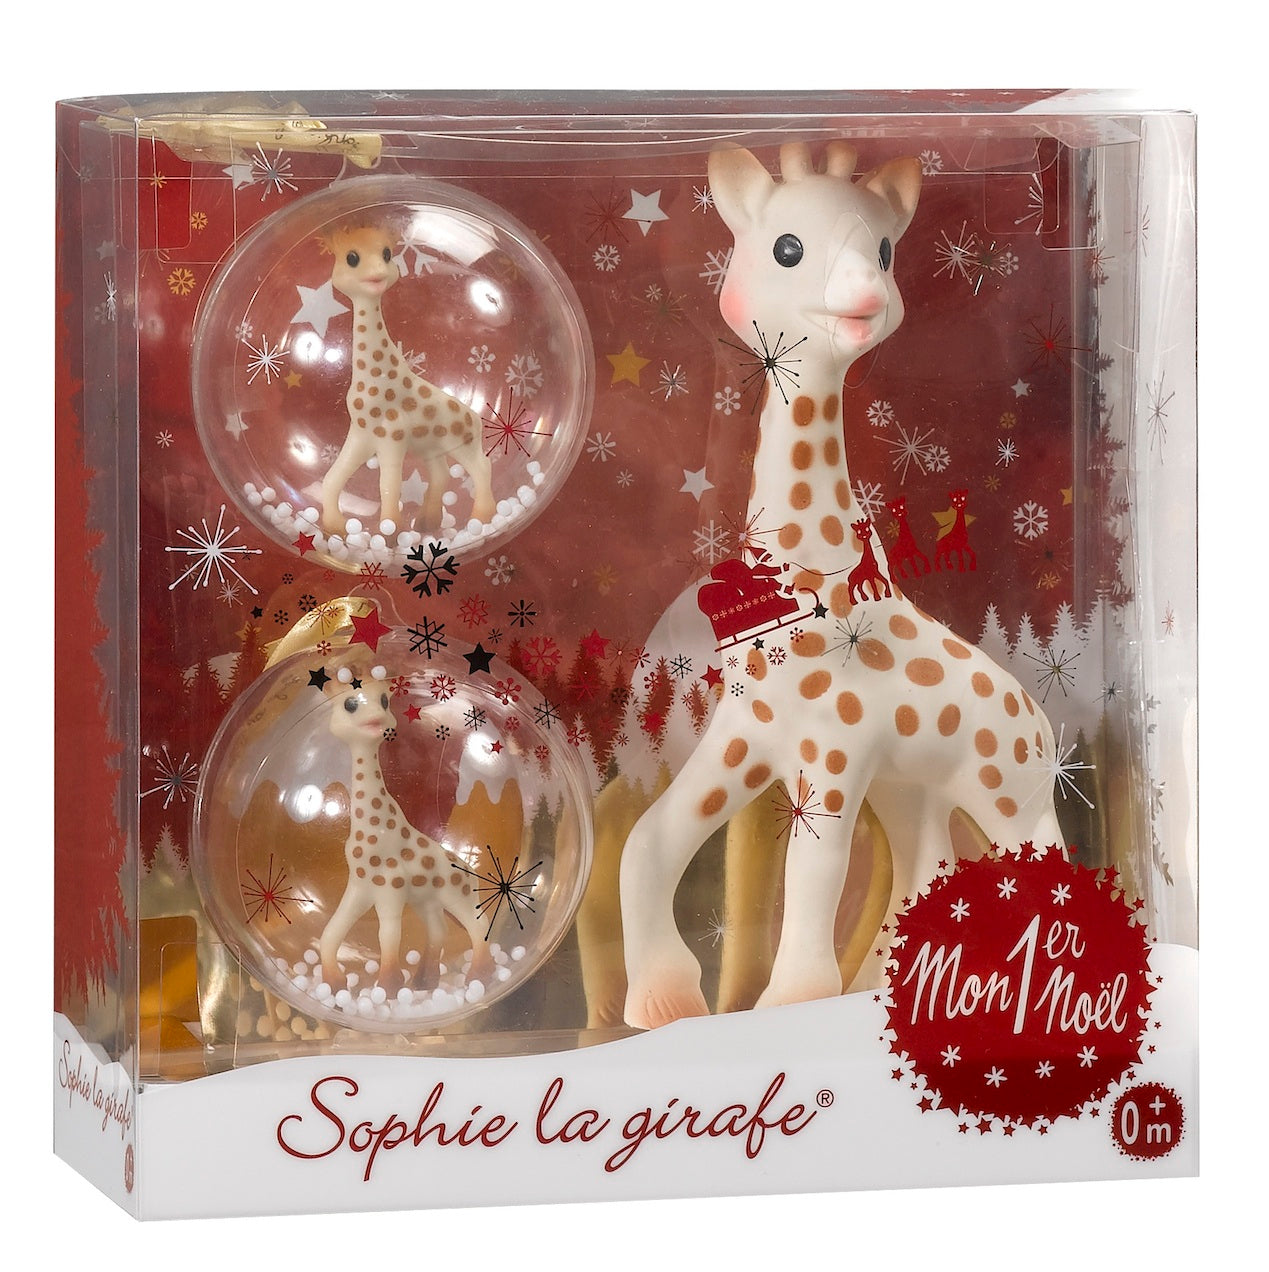 Little Giraffe - Sophie the Giraffe first Christmas set